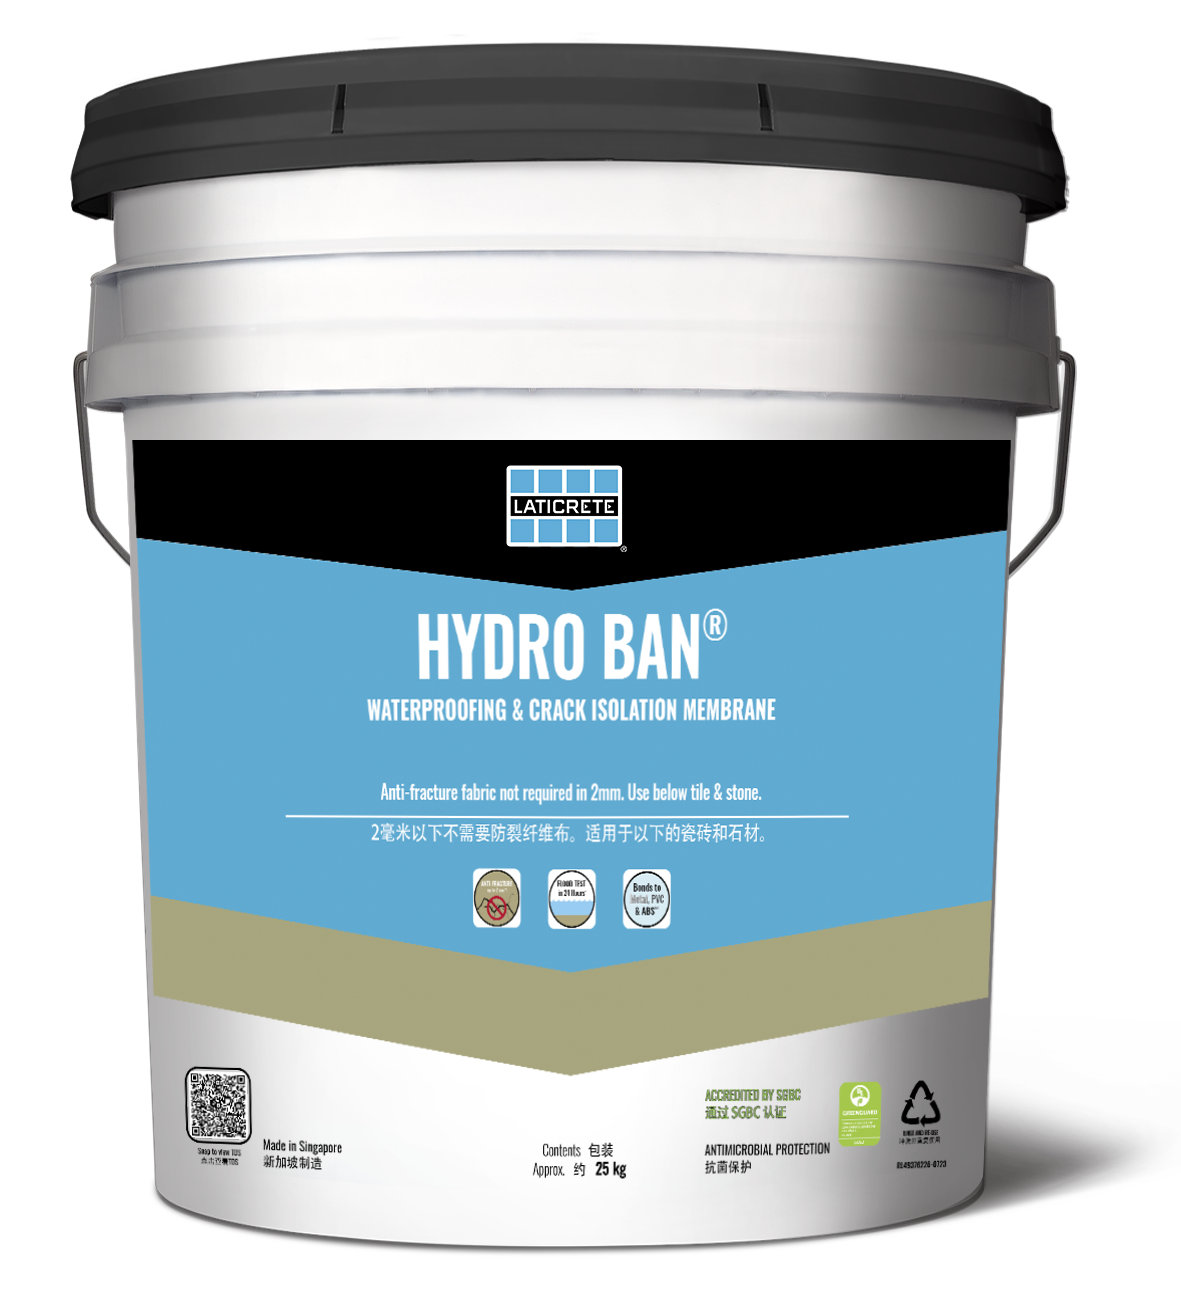 Hydro Ban Waterproofing Membrane